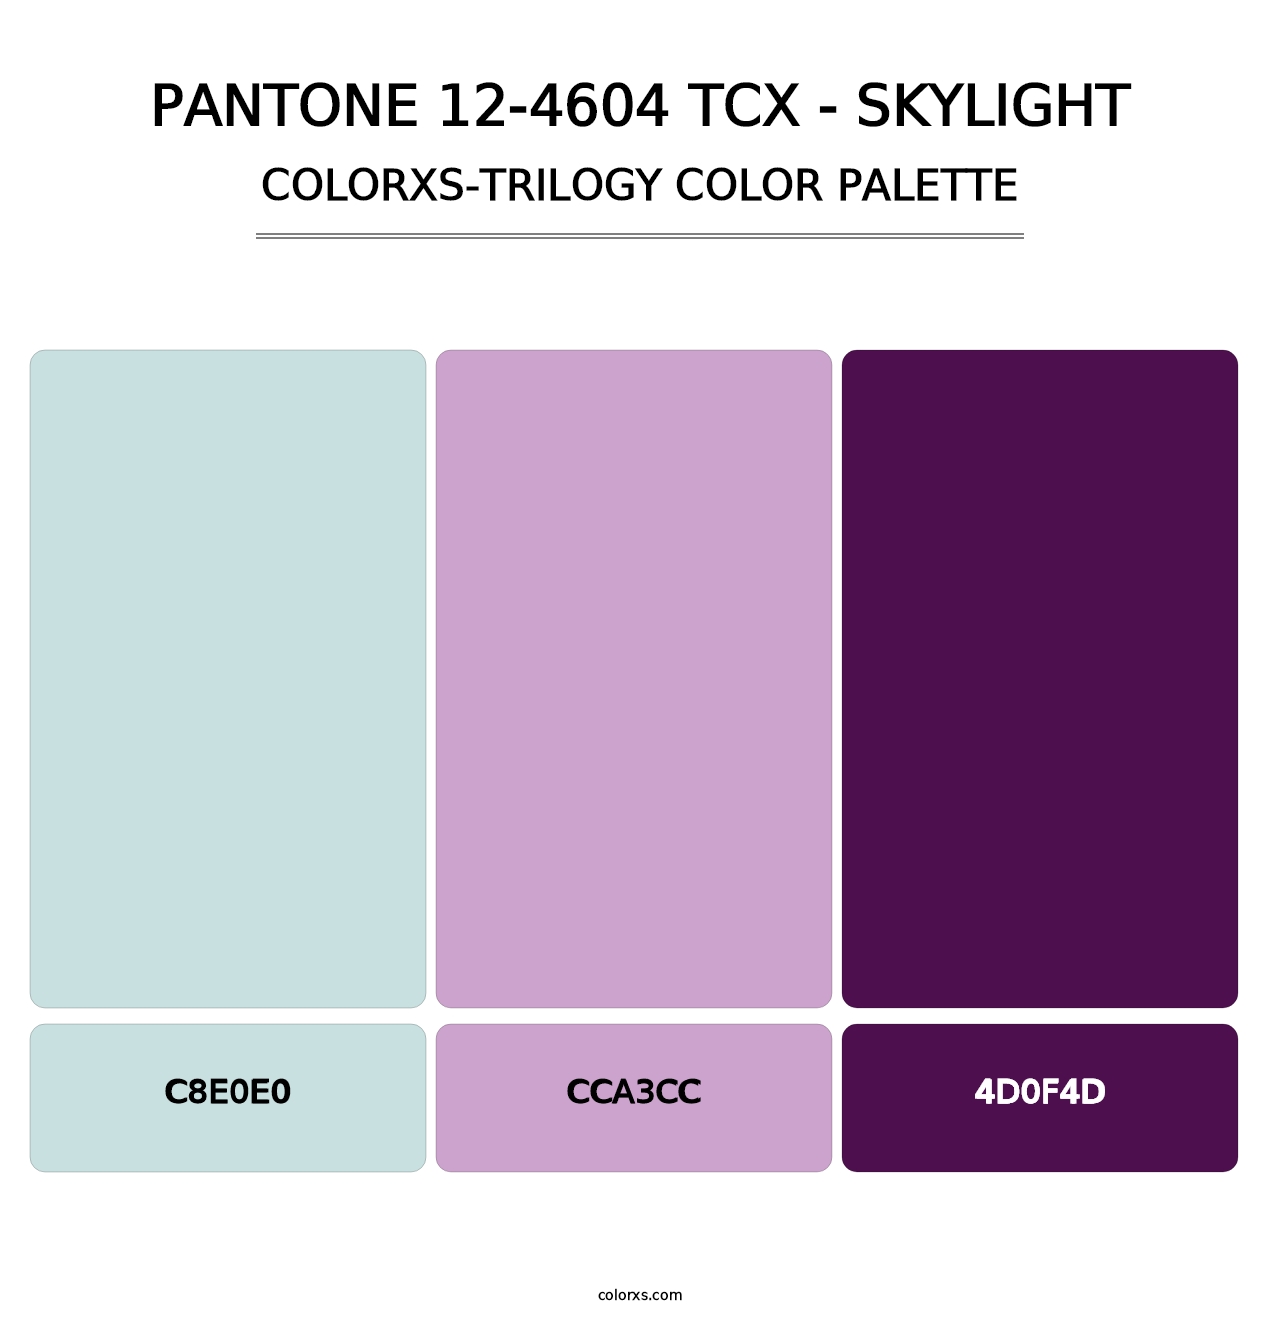 PANTONE 12-4604 TCX - Skylight - Colorxs Trilogy Palette